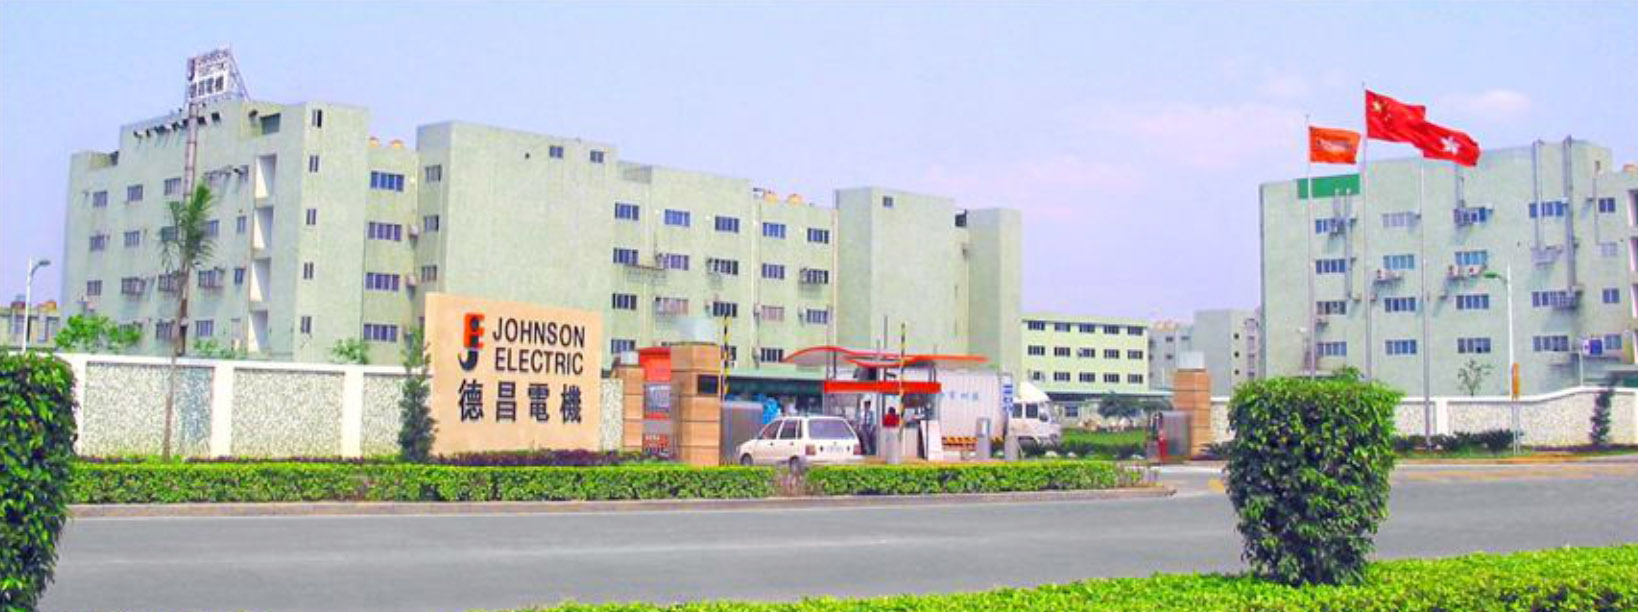 Johnson Electric (Shenzhen) Co., Ltd. (Hong Kong capital)